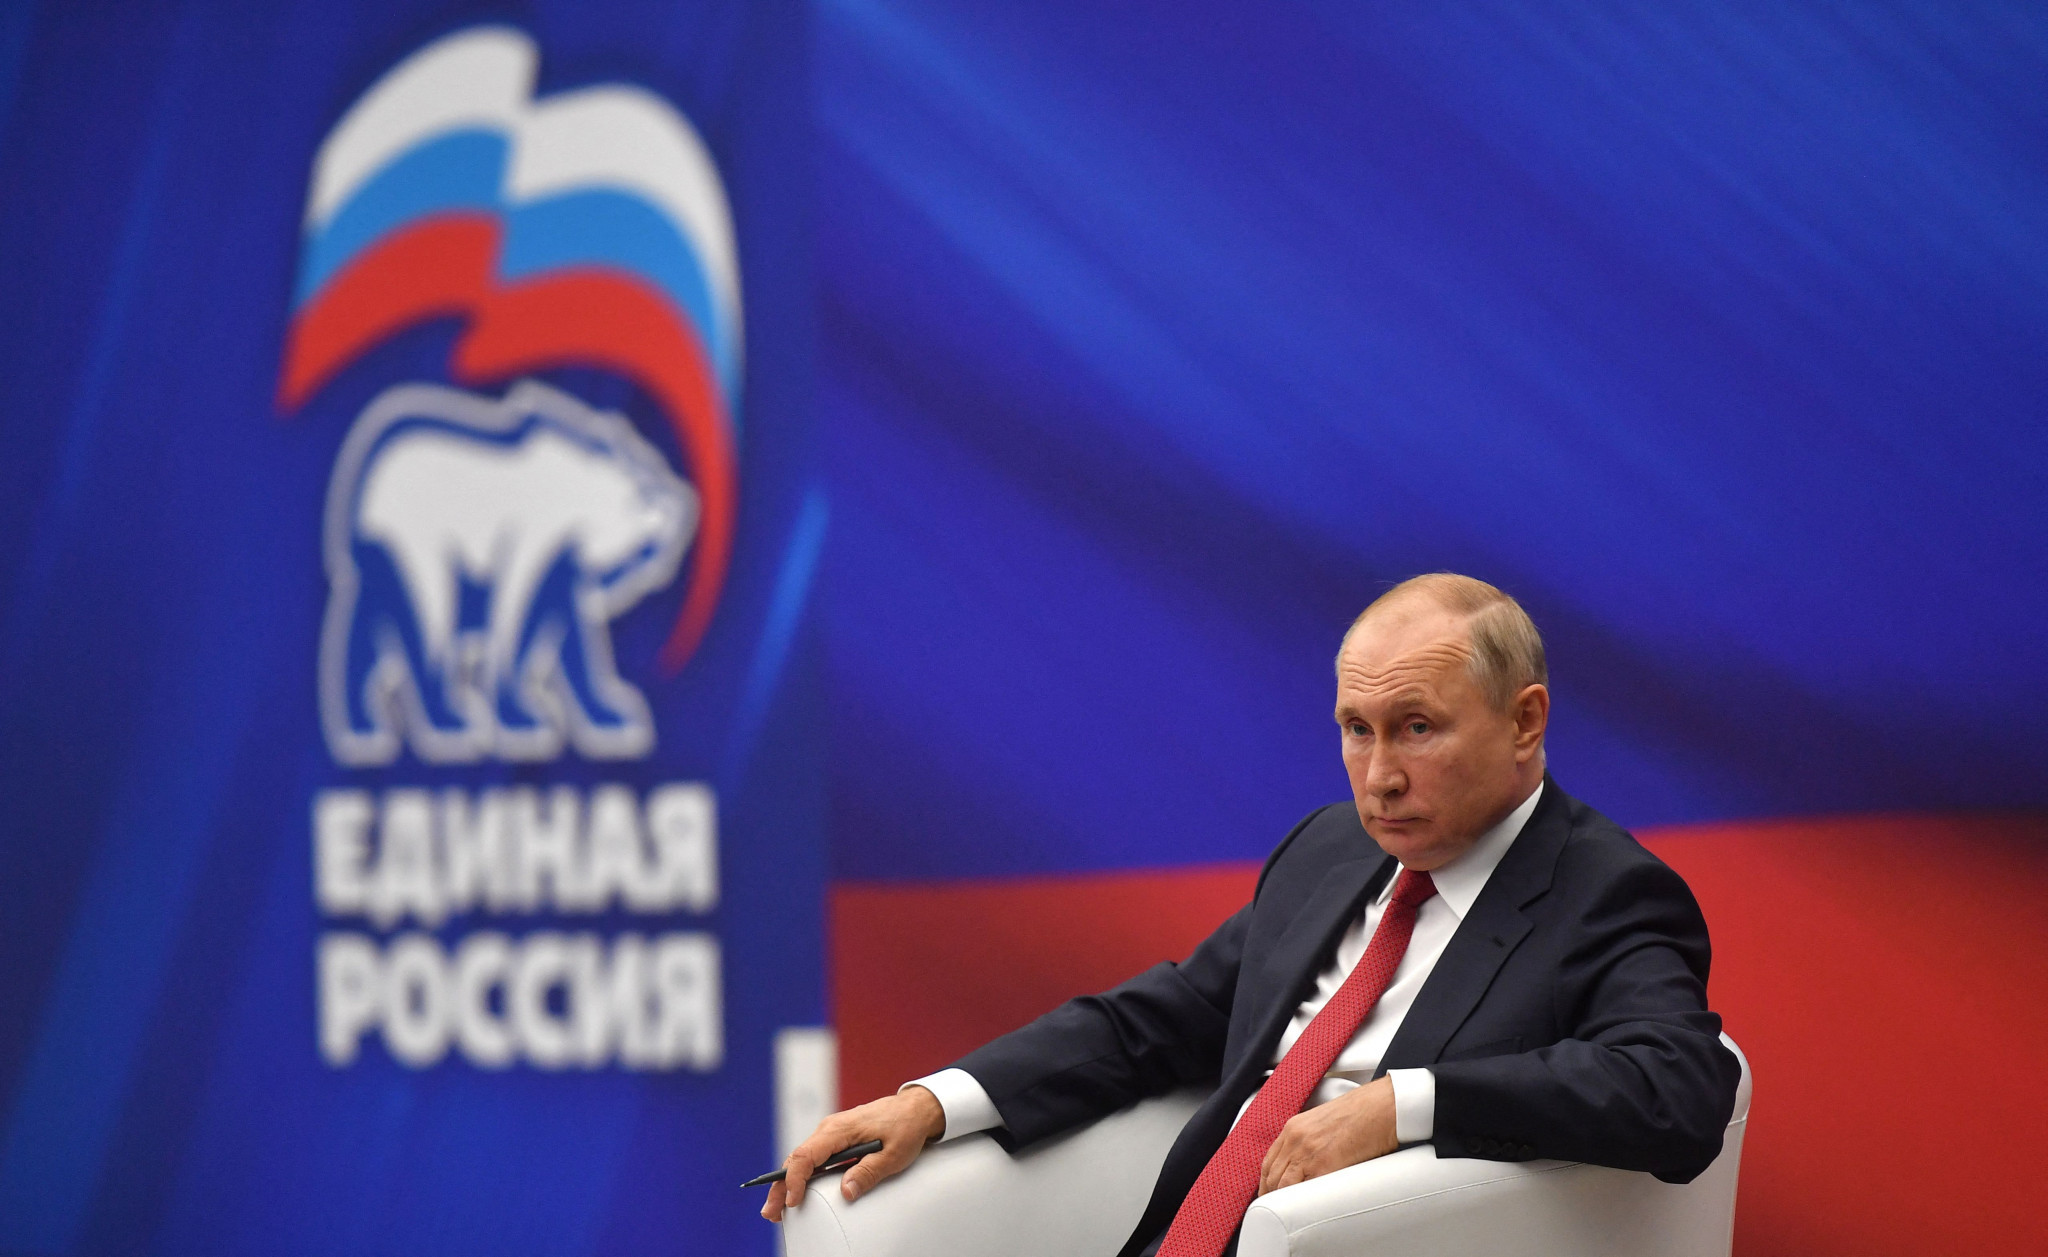 Vladivostok latest Russian city to enter 2036 Olympic bidding, Putin reveals